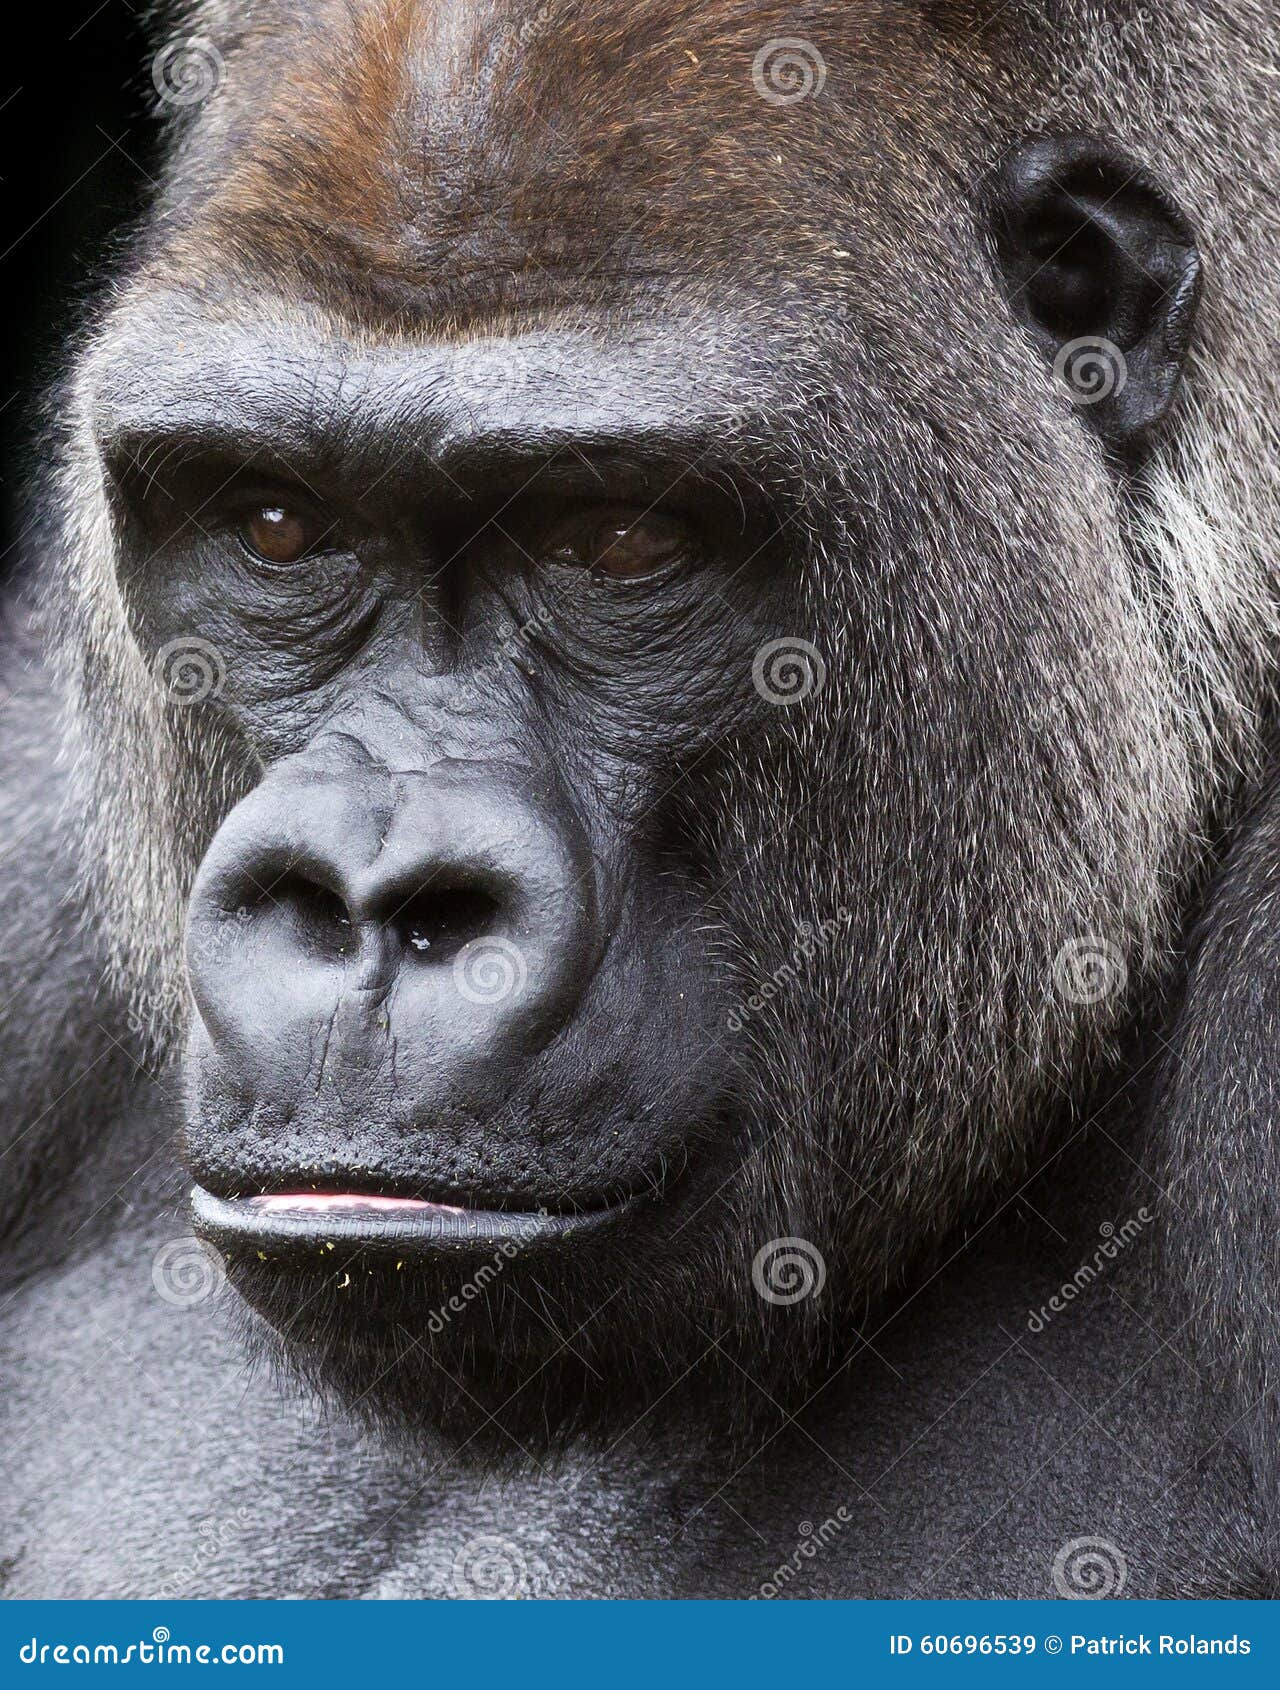 https://thumbs.dreamstime.com/z/silverback-gorilla-portrait-closeup-silver-back-60696539.jpg